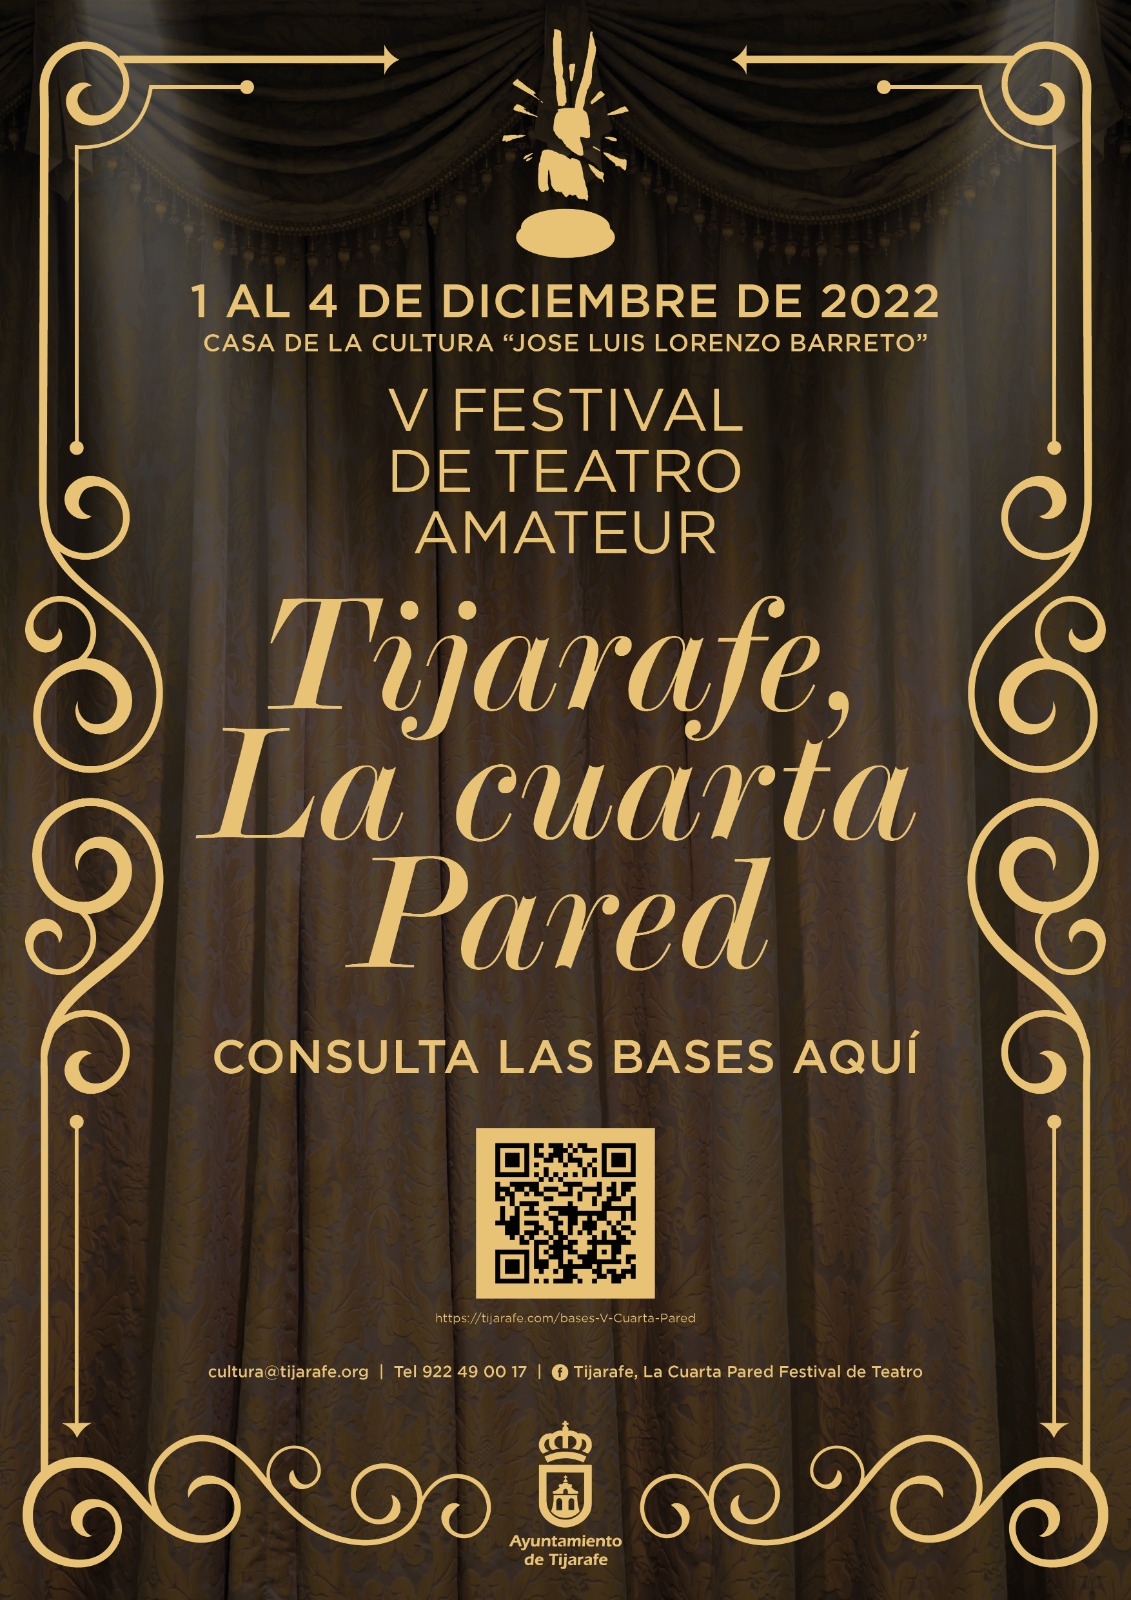 V Festival de Teatro Amateur “Tijarafe, la cuarta pared”